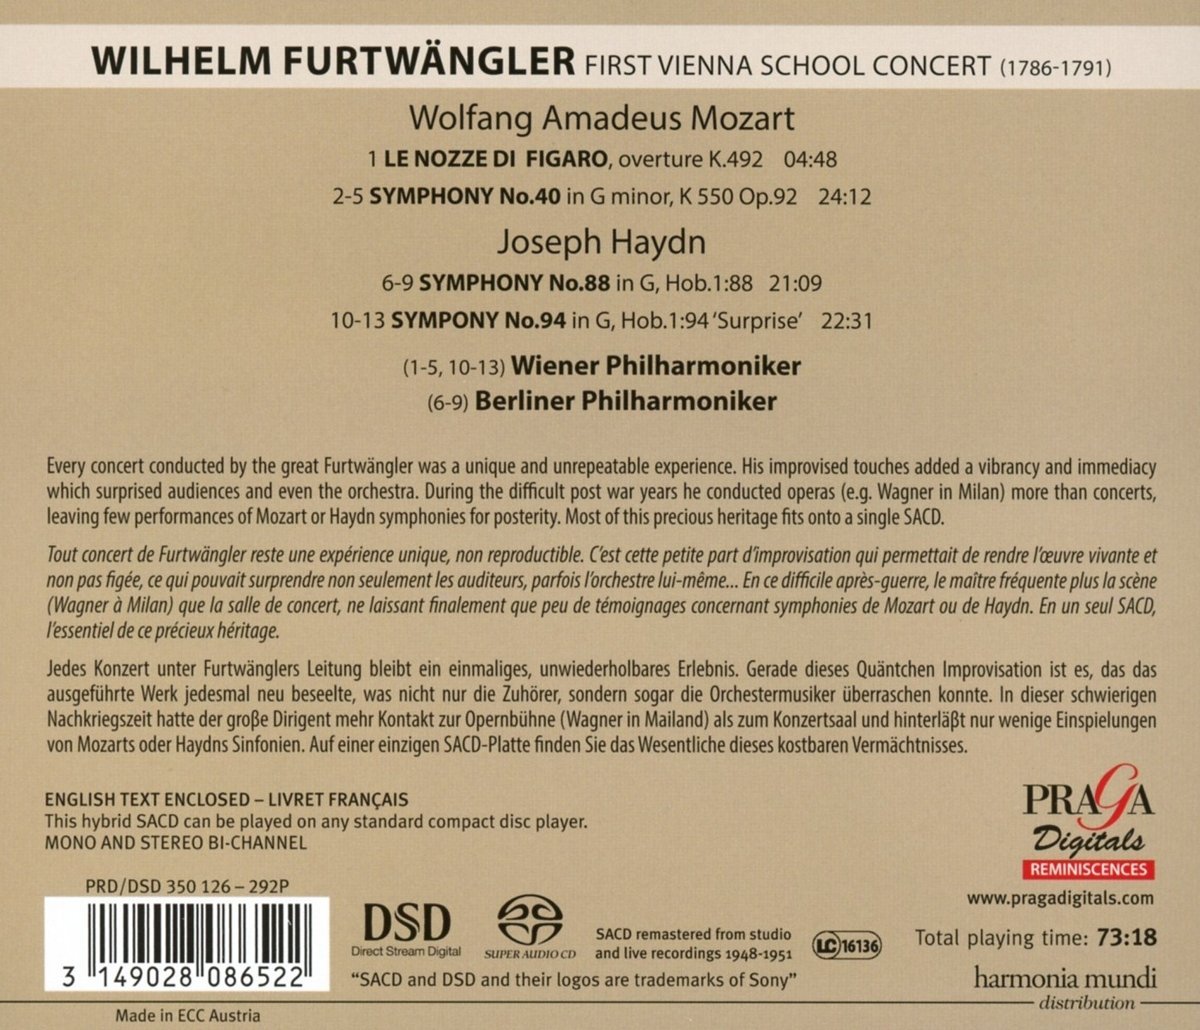 Wilhelm Furtwangler: Le Nozze (Overture). Symphony No.40 | Vienna Philharmonic Orchestra, Berlin Philharmonic Orchestra, Wolfgang Amadeus Mozart, Franz Joseph Haydn, Wilhelm Furtwangler